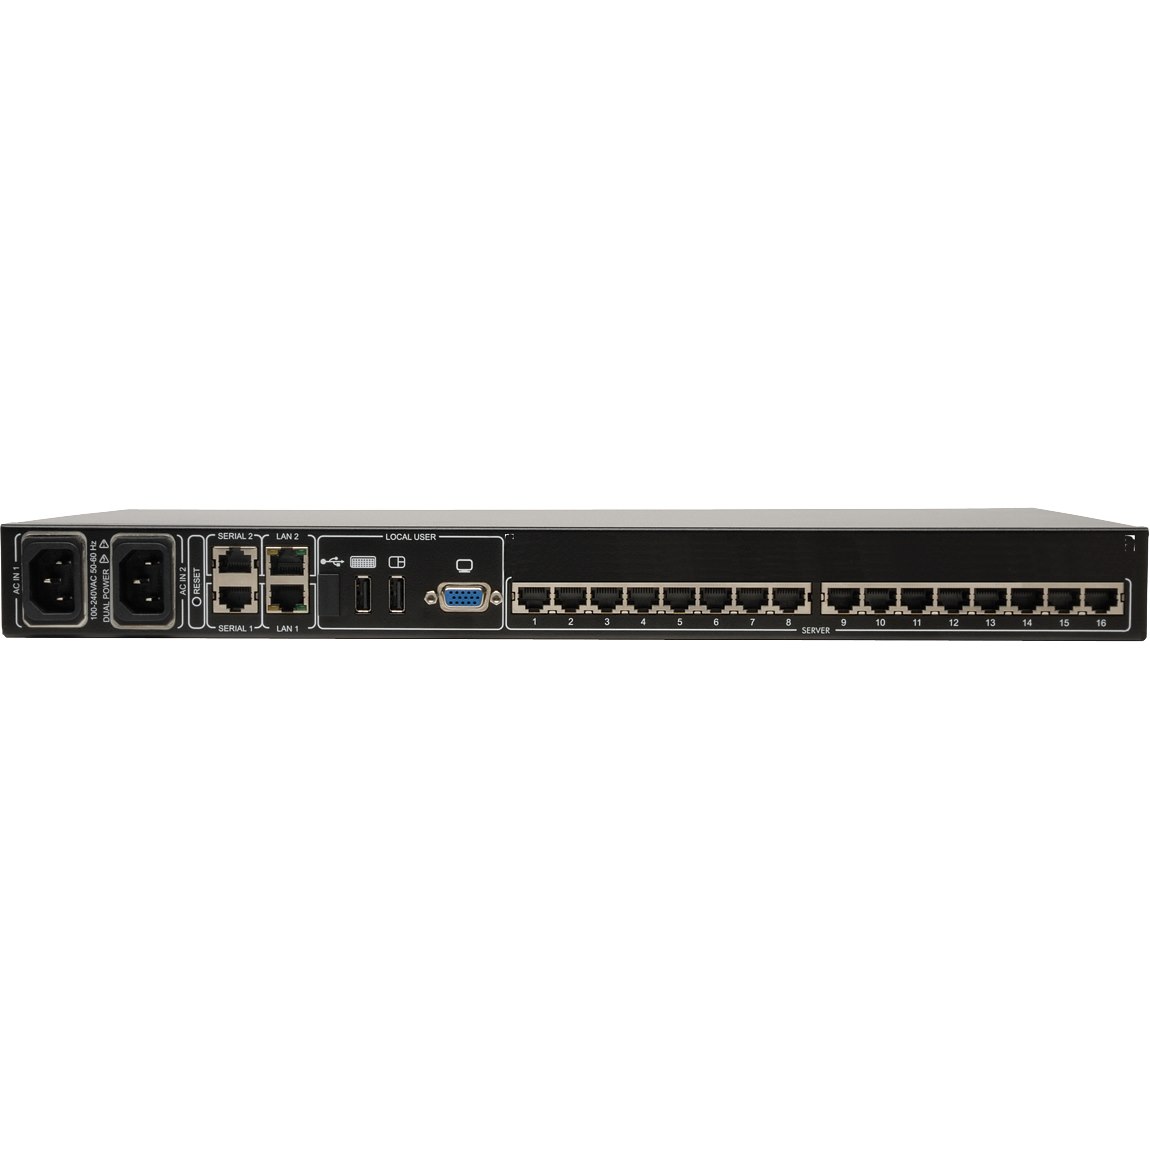 Tripp Lite by Eaton NetCommander 16-Port Cat5 KVM over IP Switch - 2 Remote + 1 Local User, 1U Rack-Mount